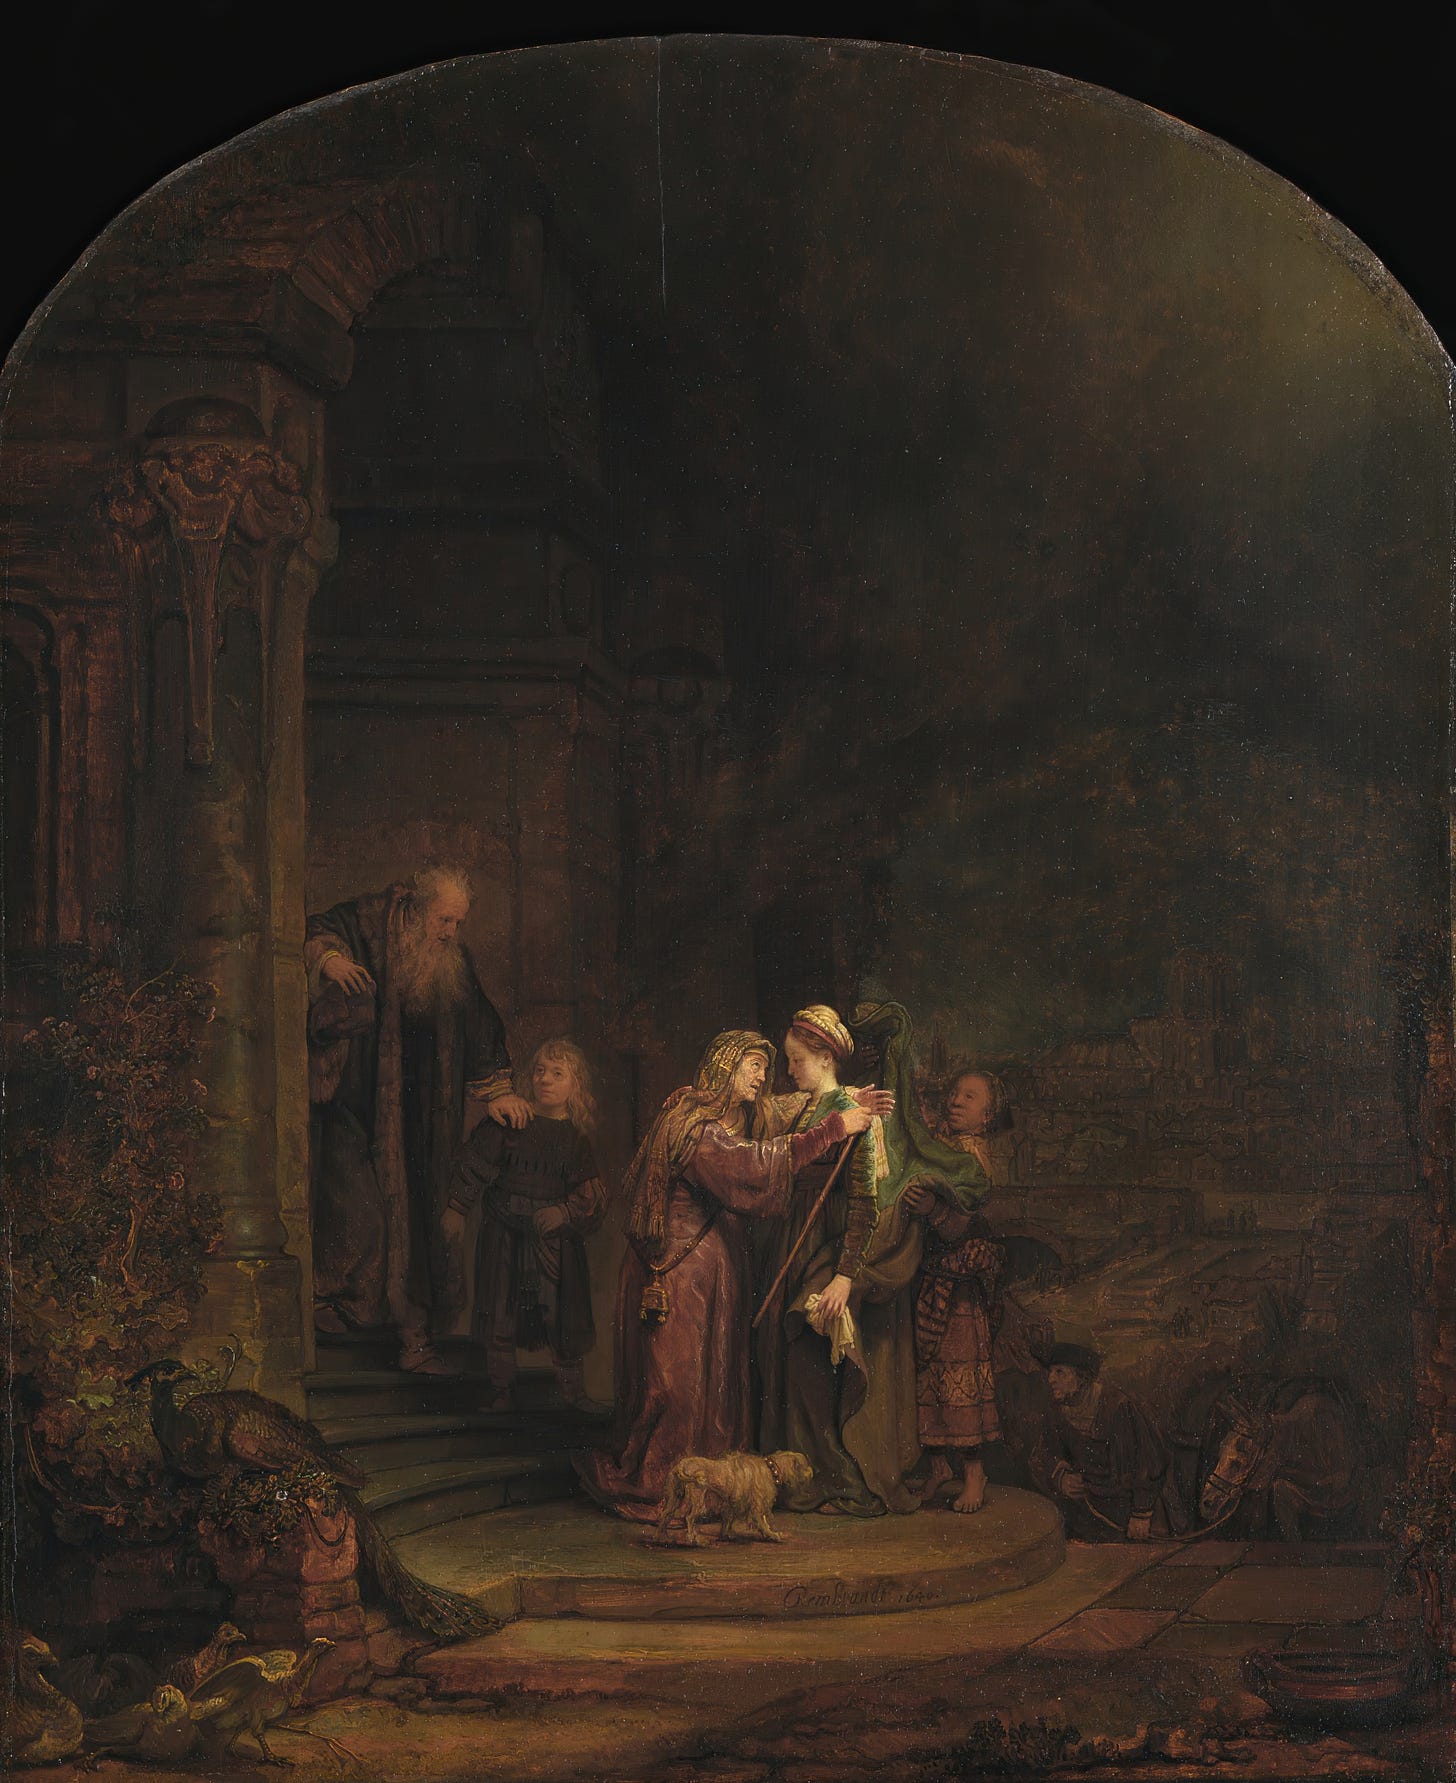 The Visitation (1640) by Rembrandt van Rijn